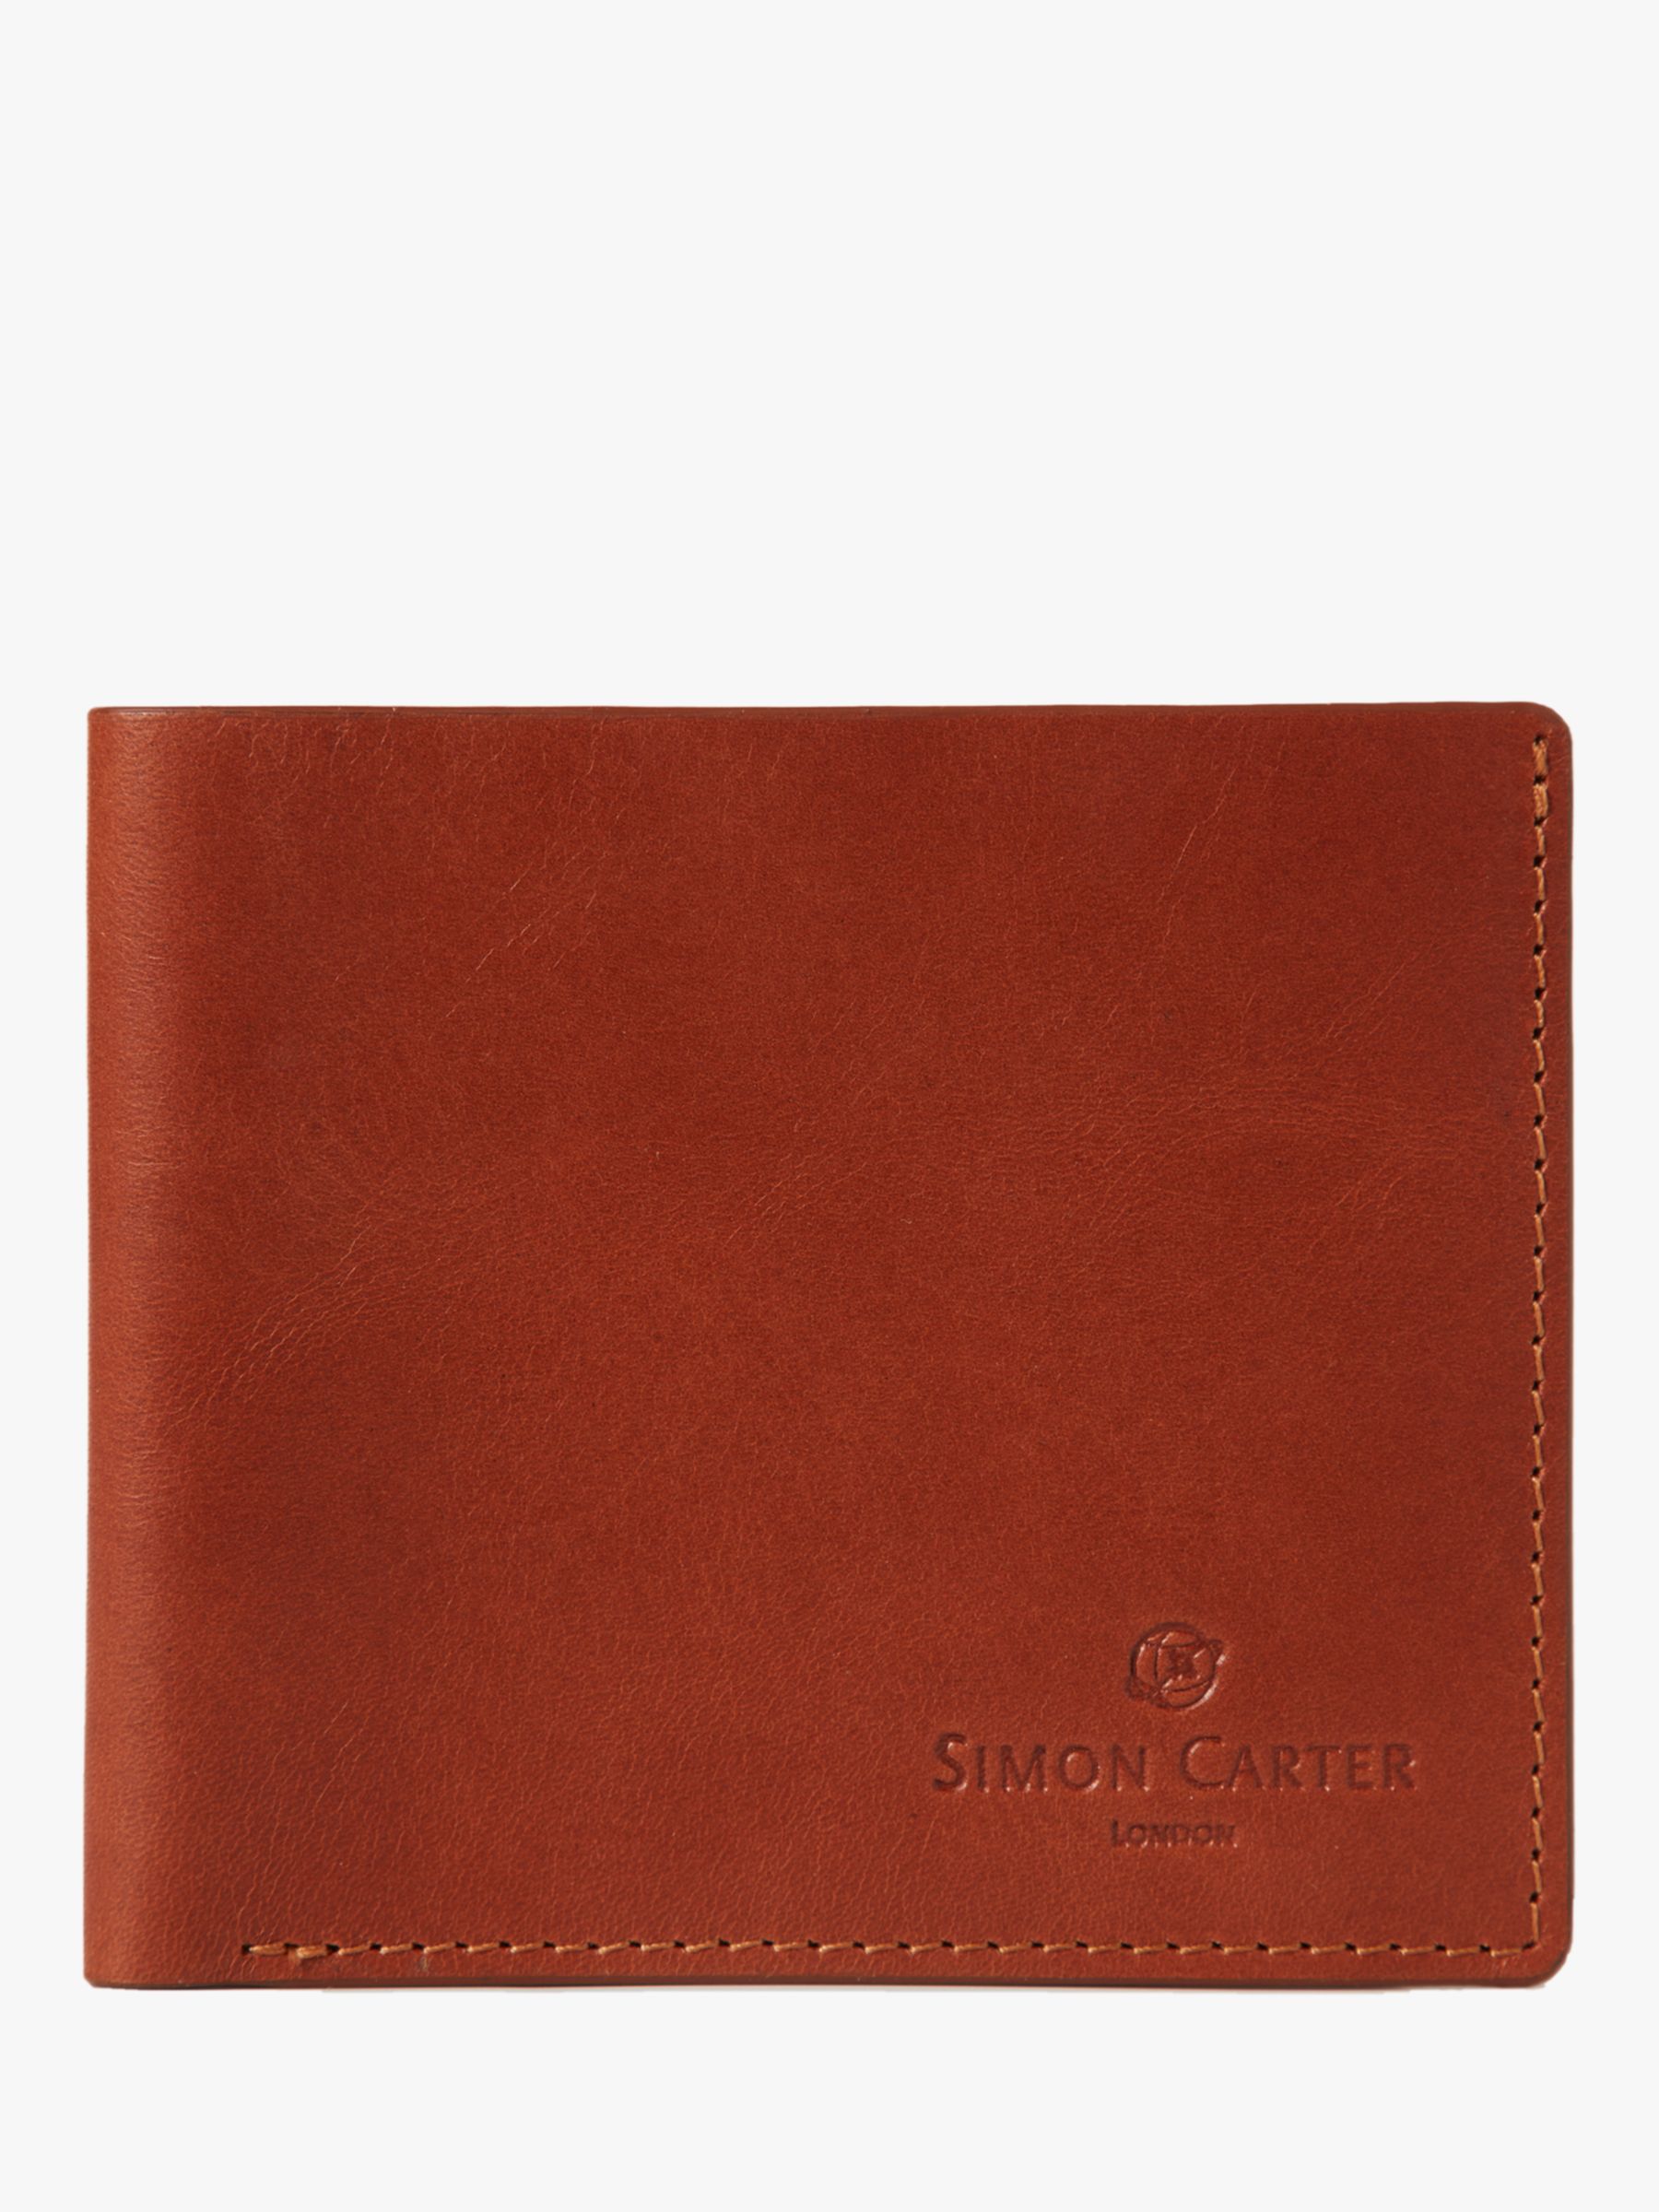 Simon Carter Slim Leather Wallet